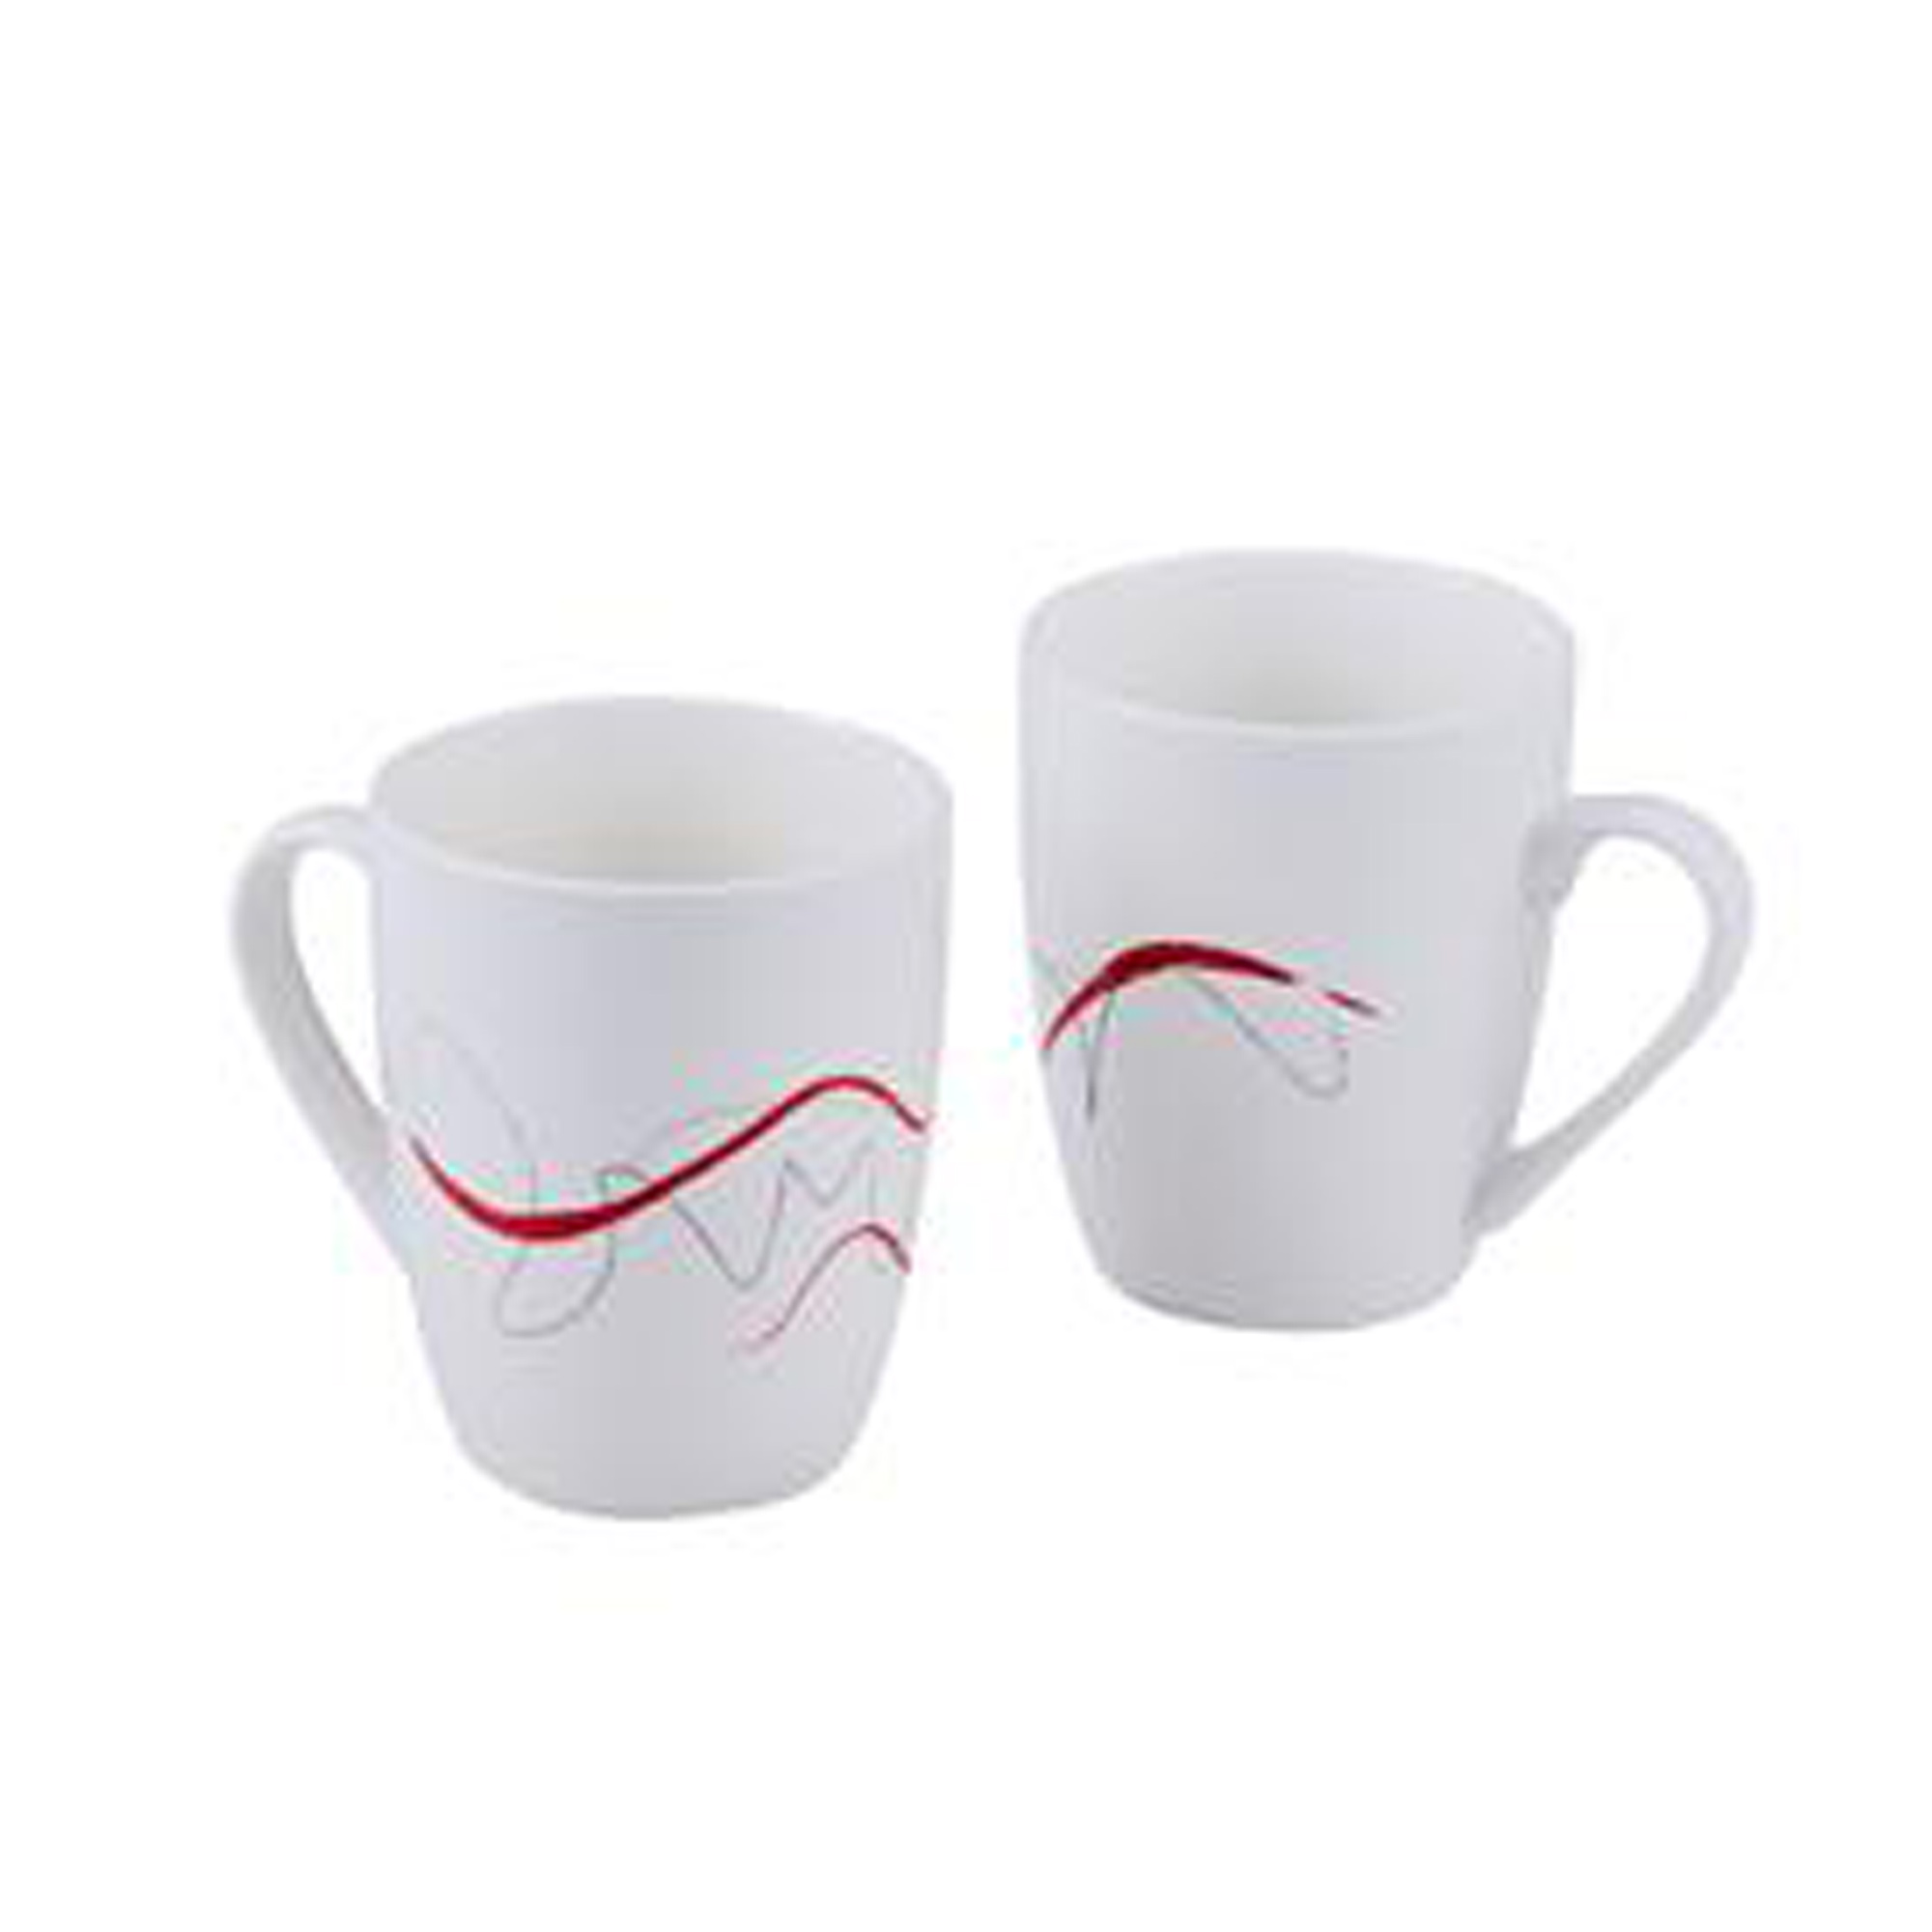 Pierre Cardin - Set de 2 tazas mugs New Bone China Pierre Cardin en color blanco